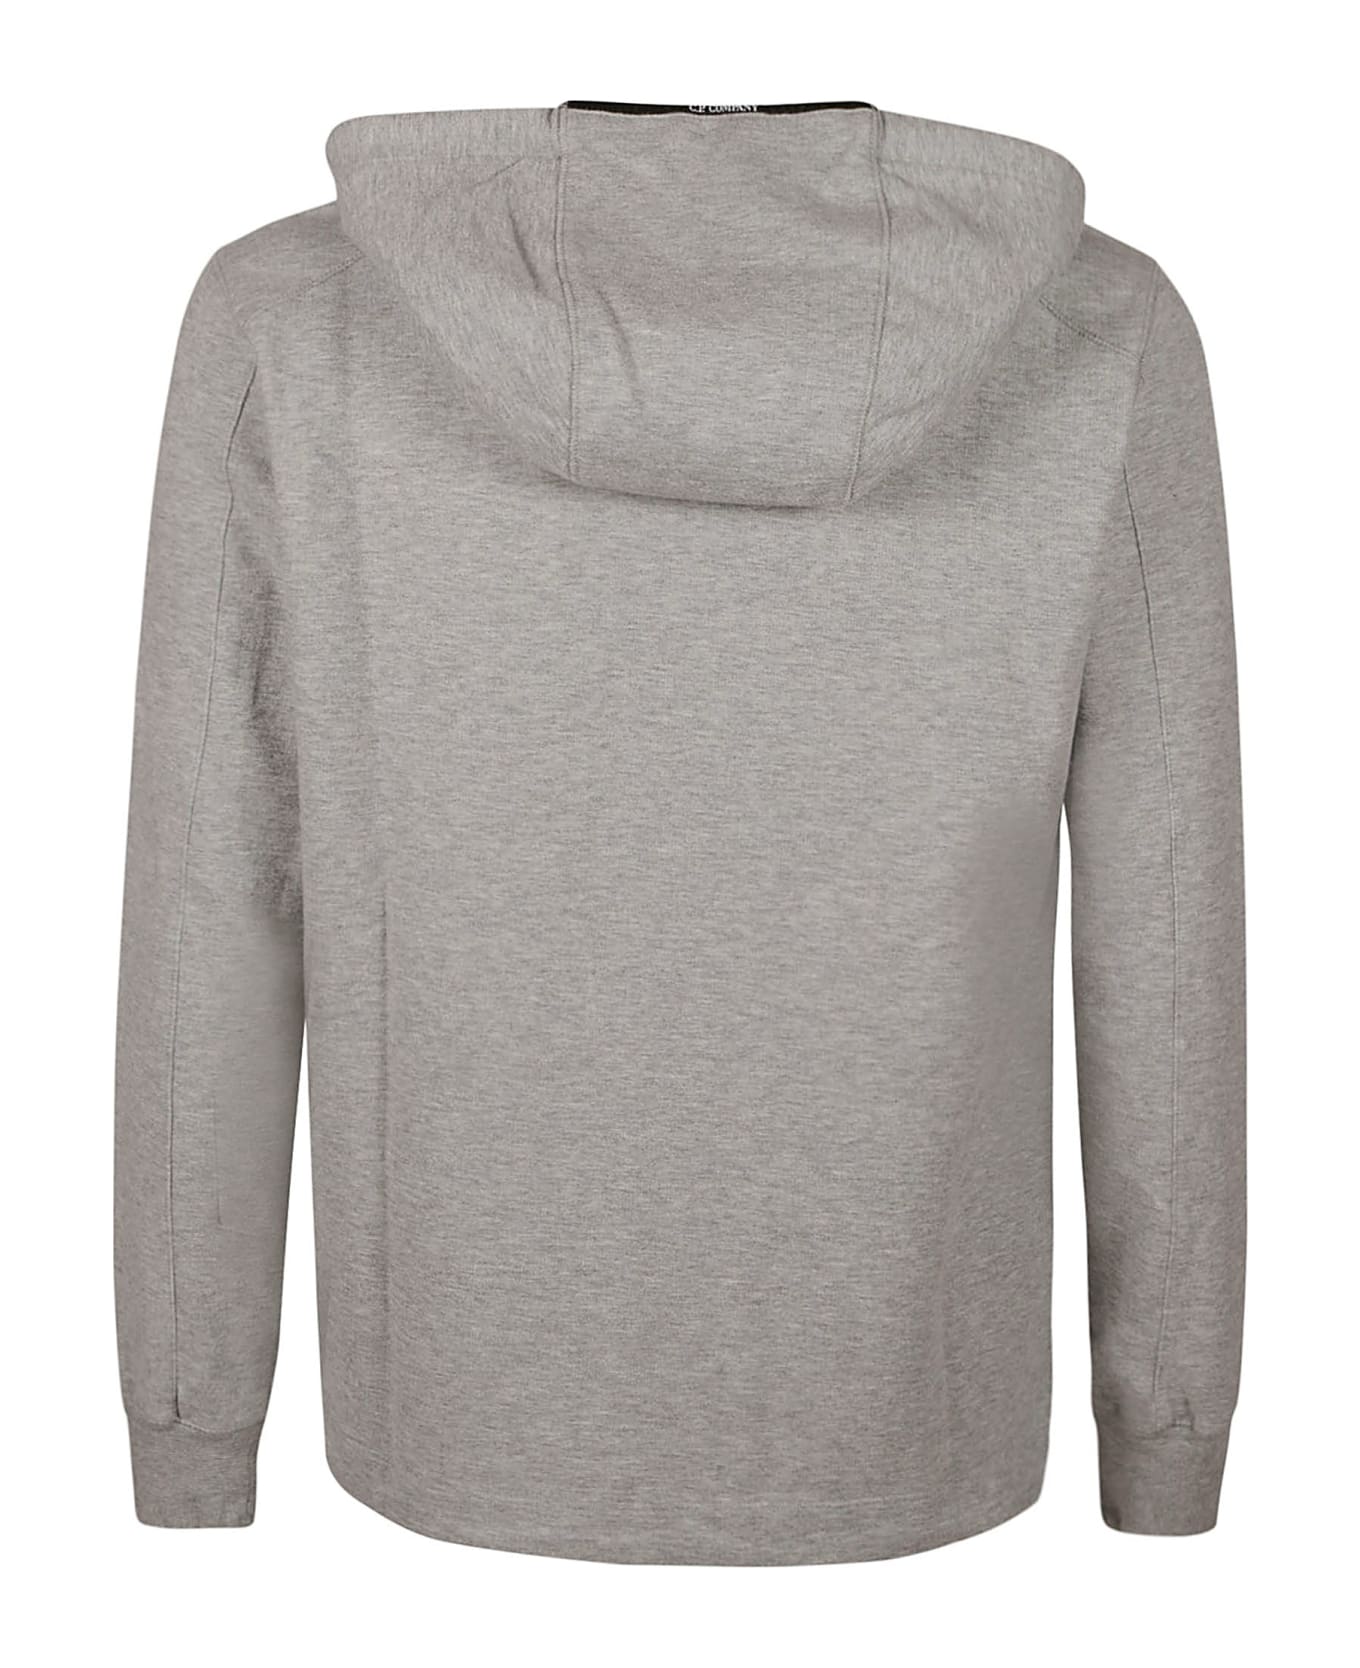 C.P. Company Light Fleece Hooded Sweatshirt - GREY MELANGE フリース